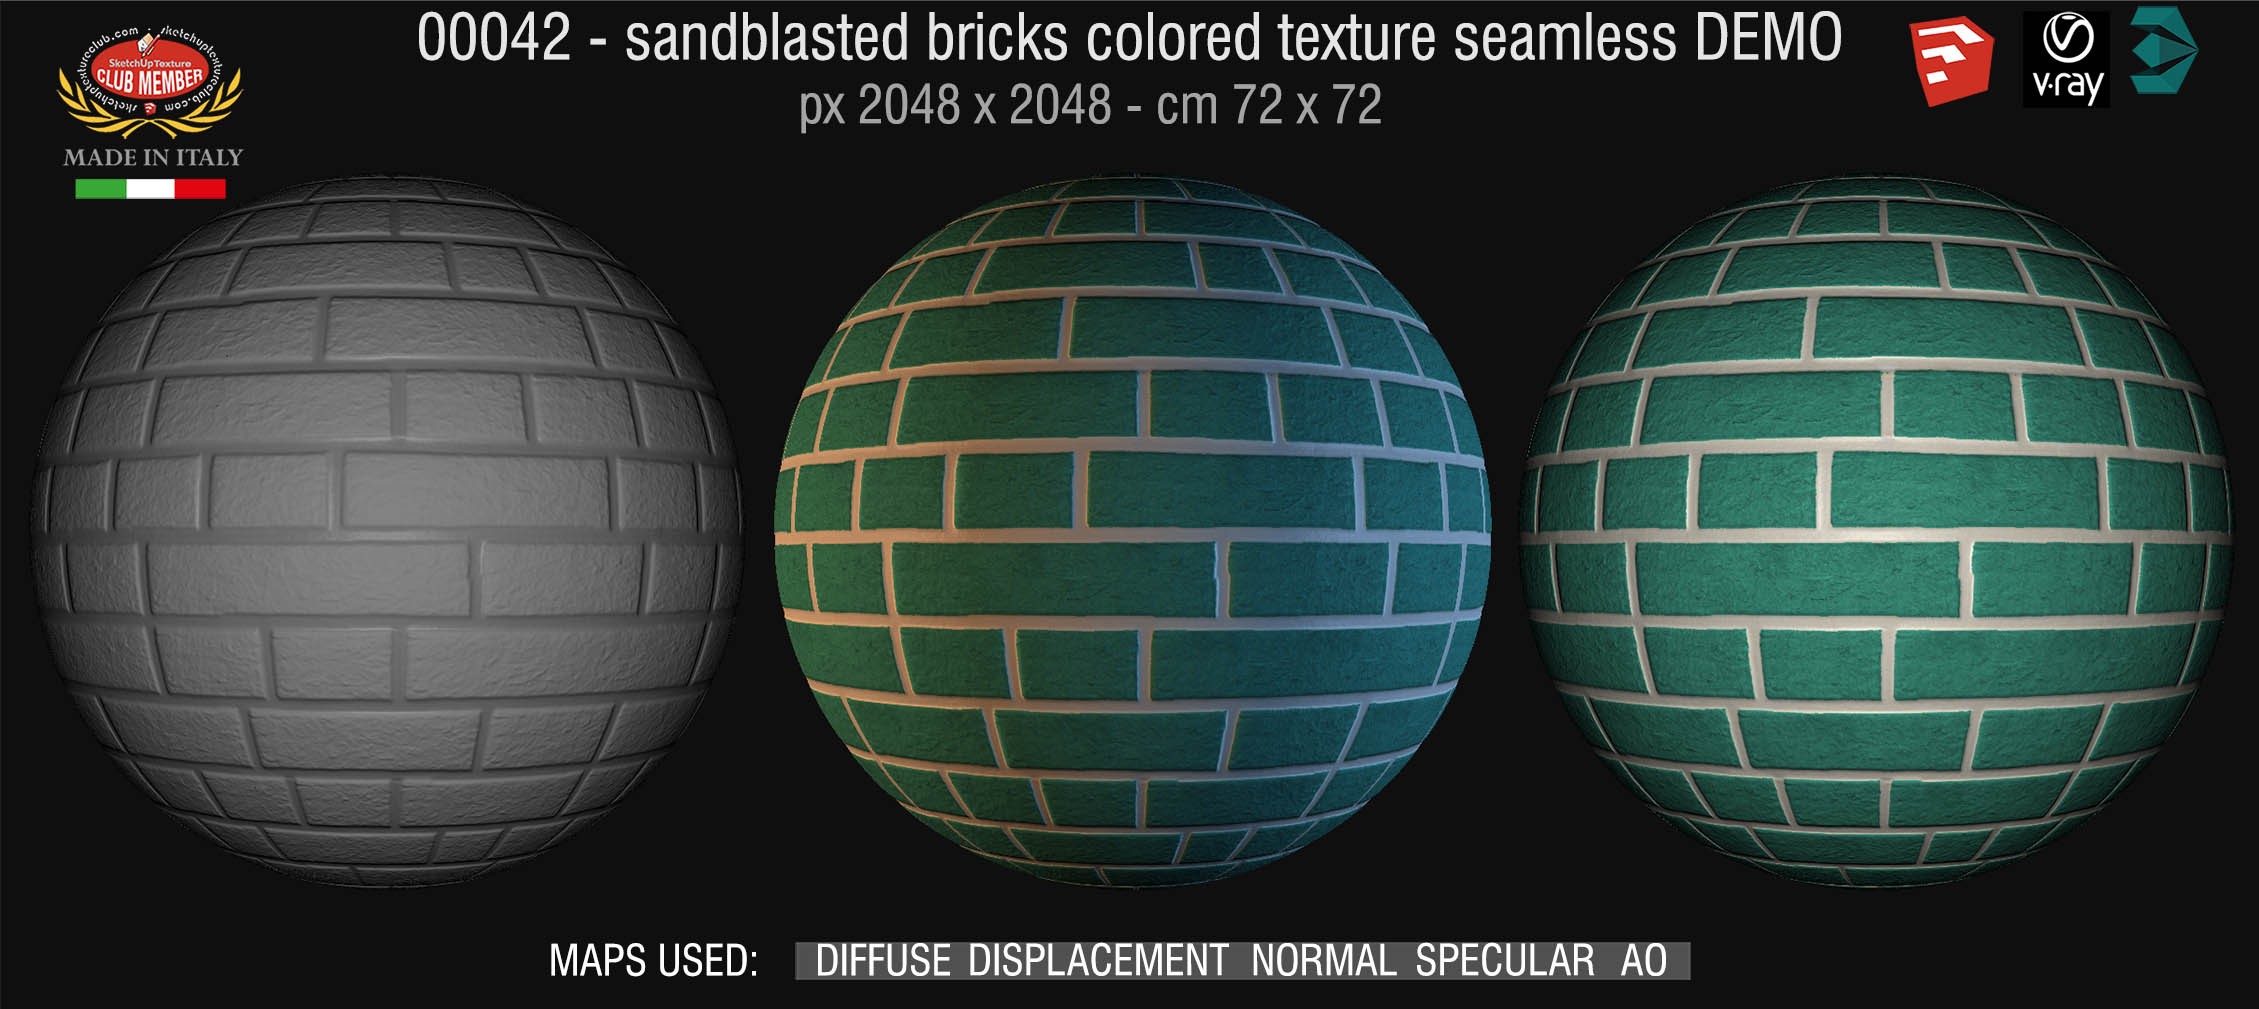 00042 Sandblasted bricks colored texture seamless + maps DEMO